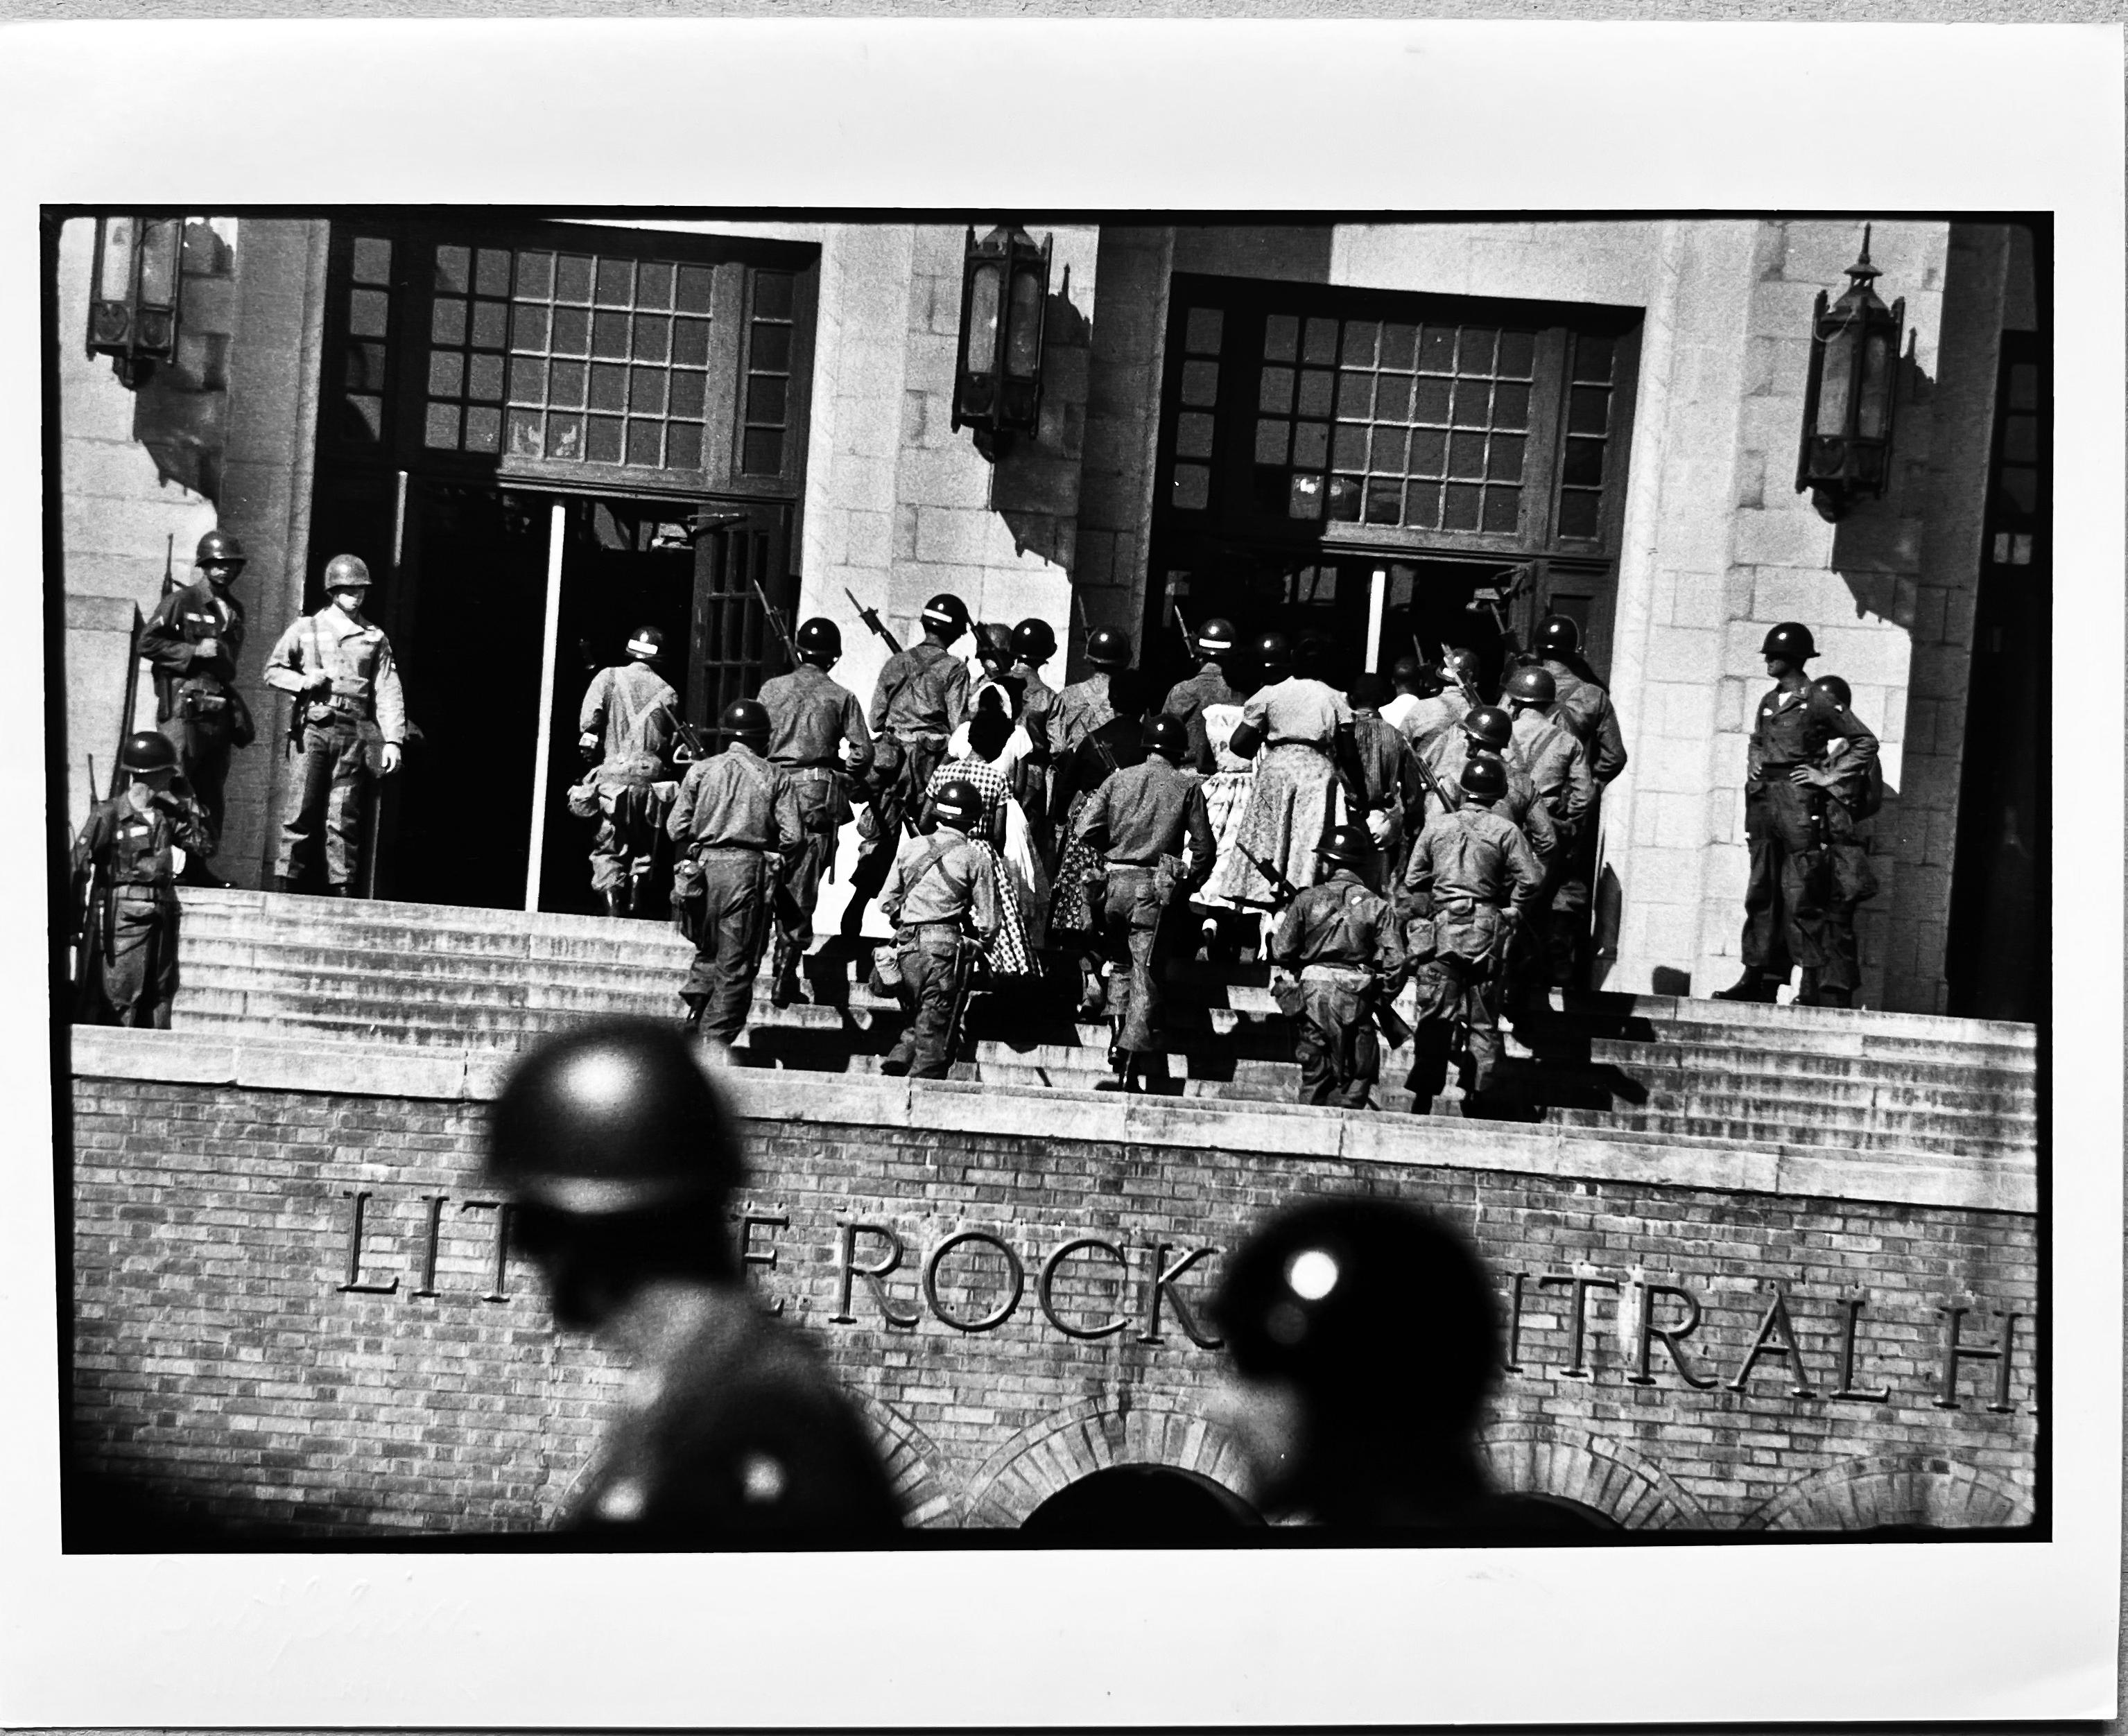 Burt Glinn Figurative Photograph - Little Rock, Arkansas, Black and White Photography Civil Rights Movement USA